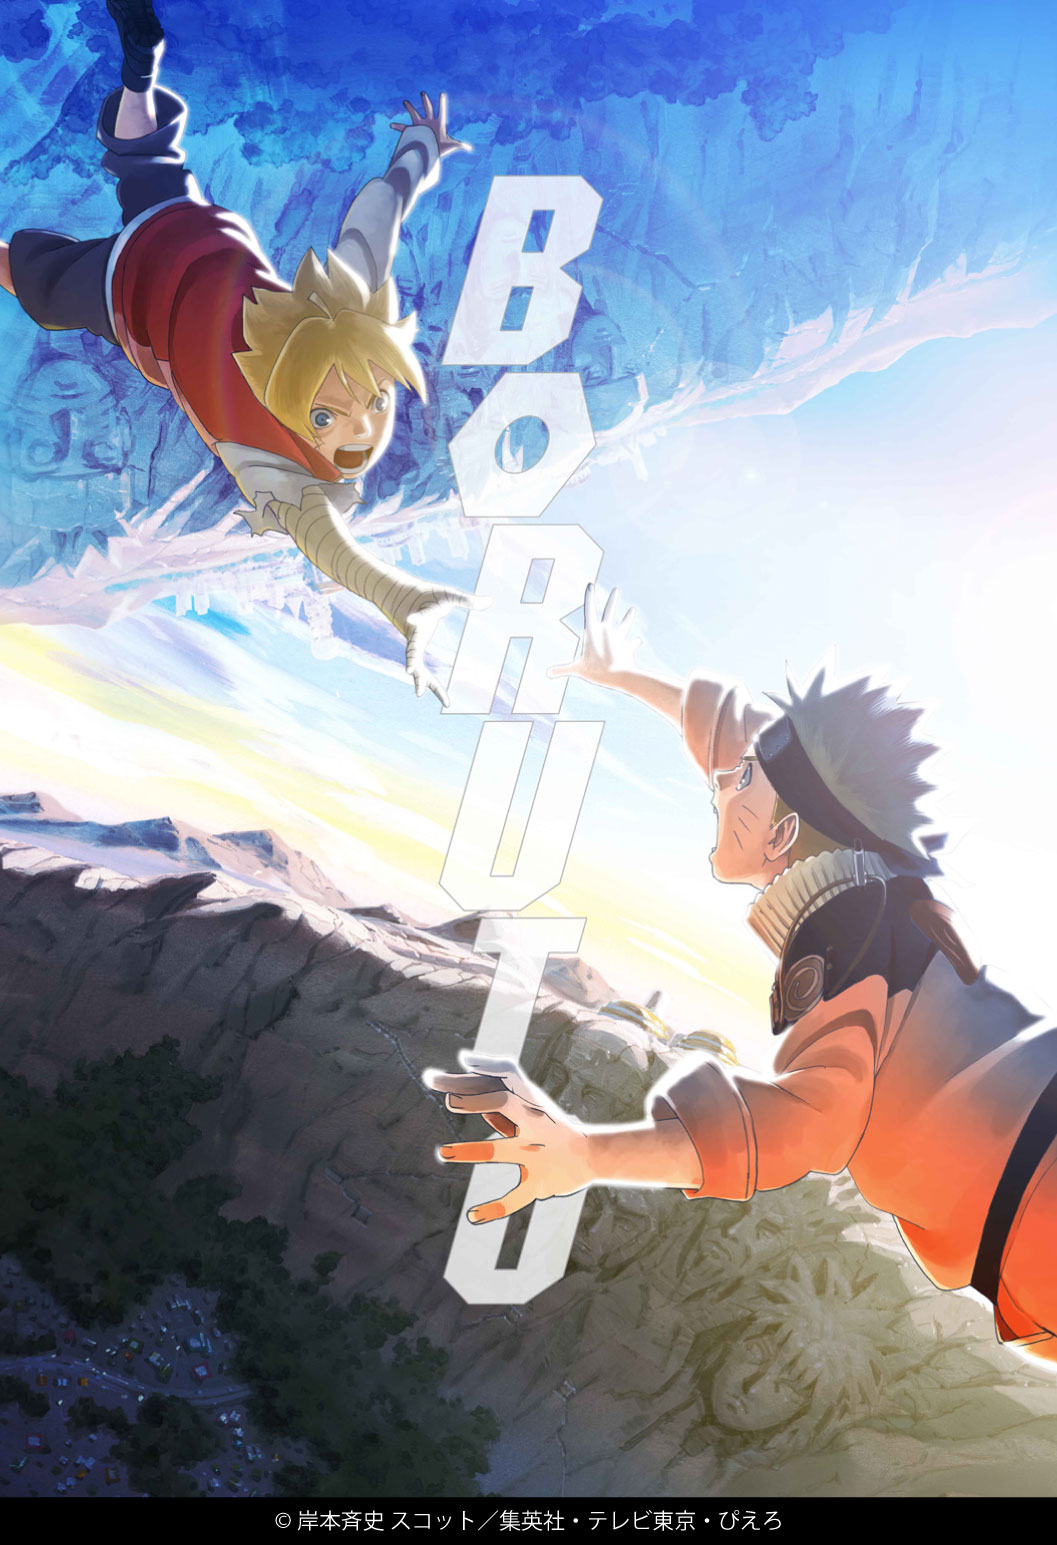 Flowback To Perform The Next Boruto Naruto Next Generations Anime